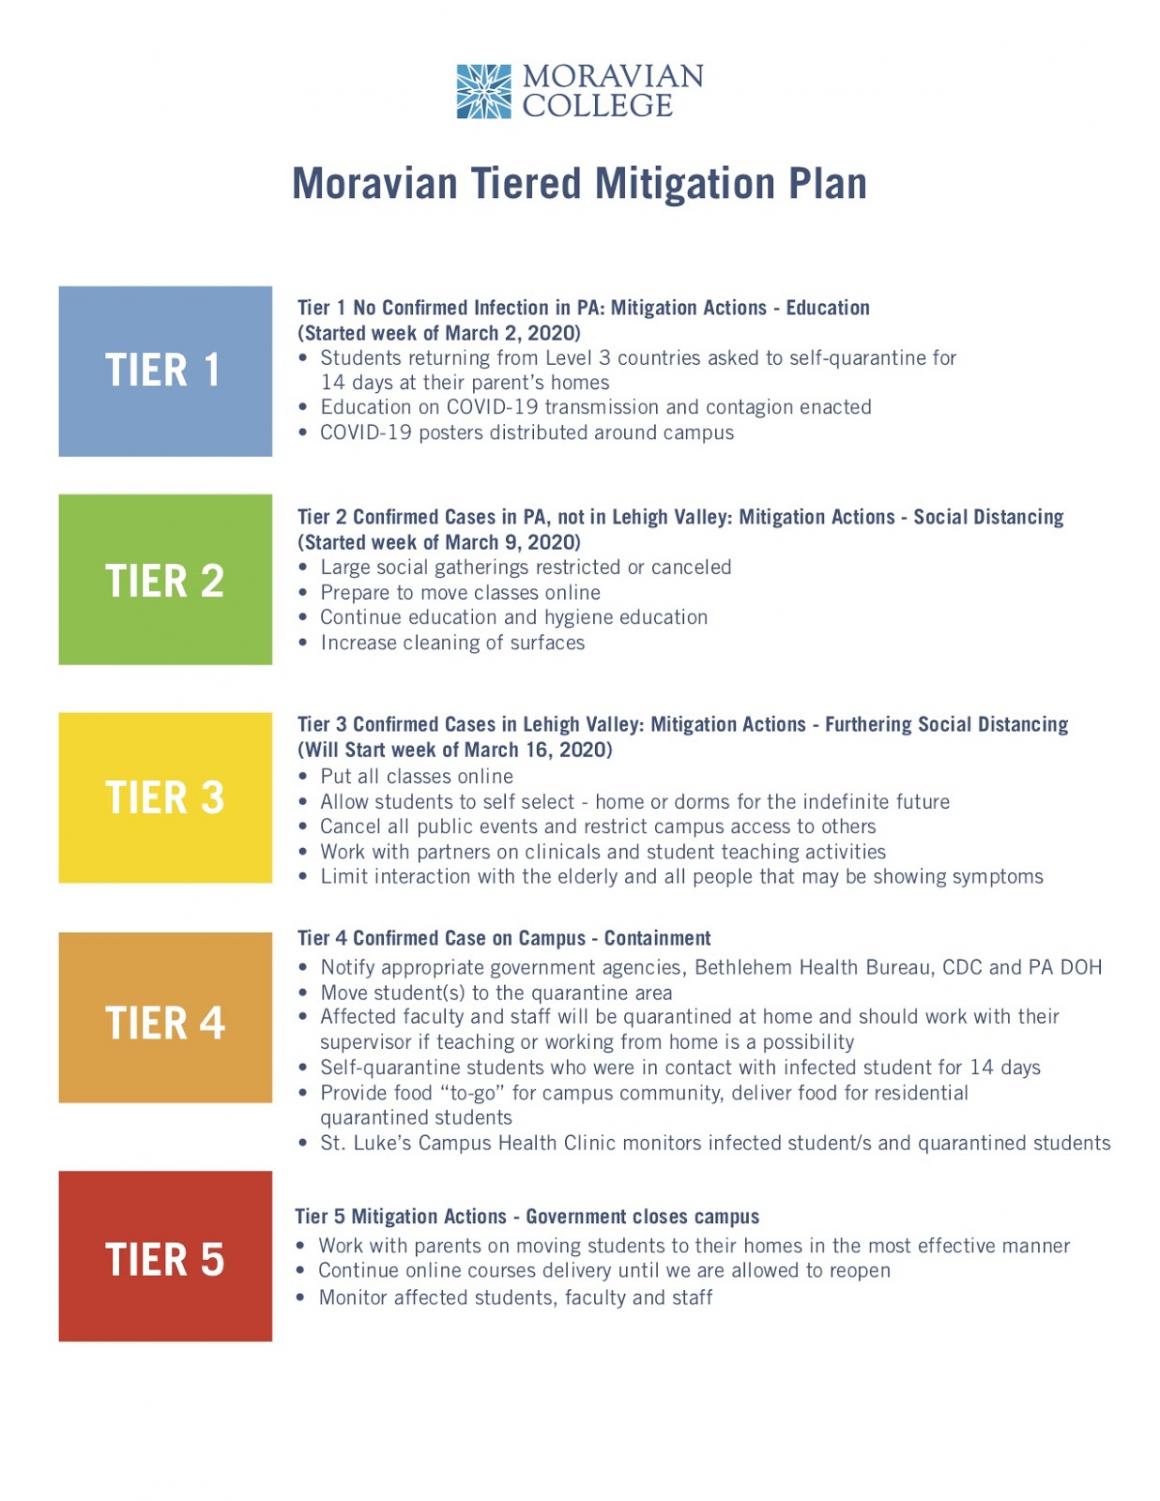 Moravian's Tiered Mitigation Plan to help stop the spread of coronavirus.